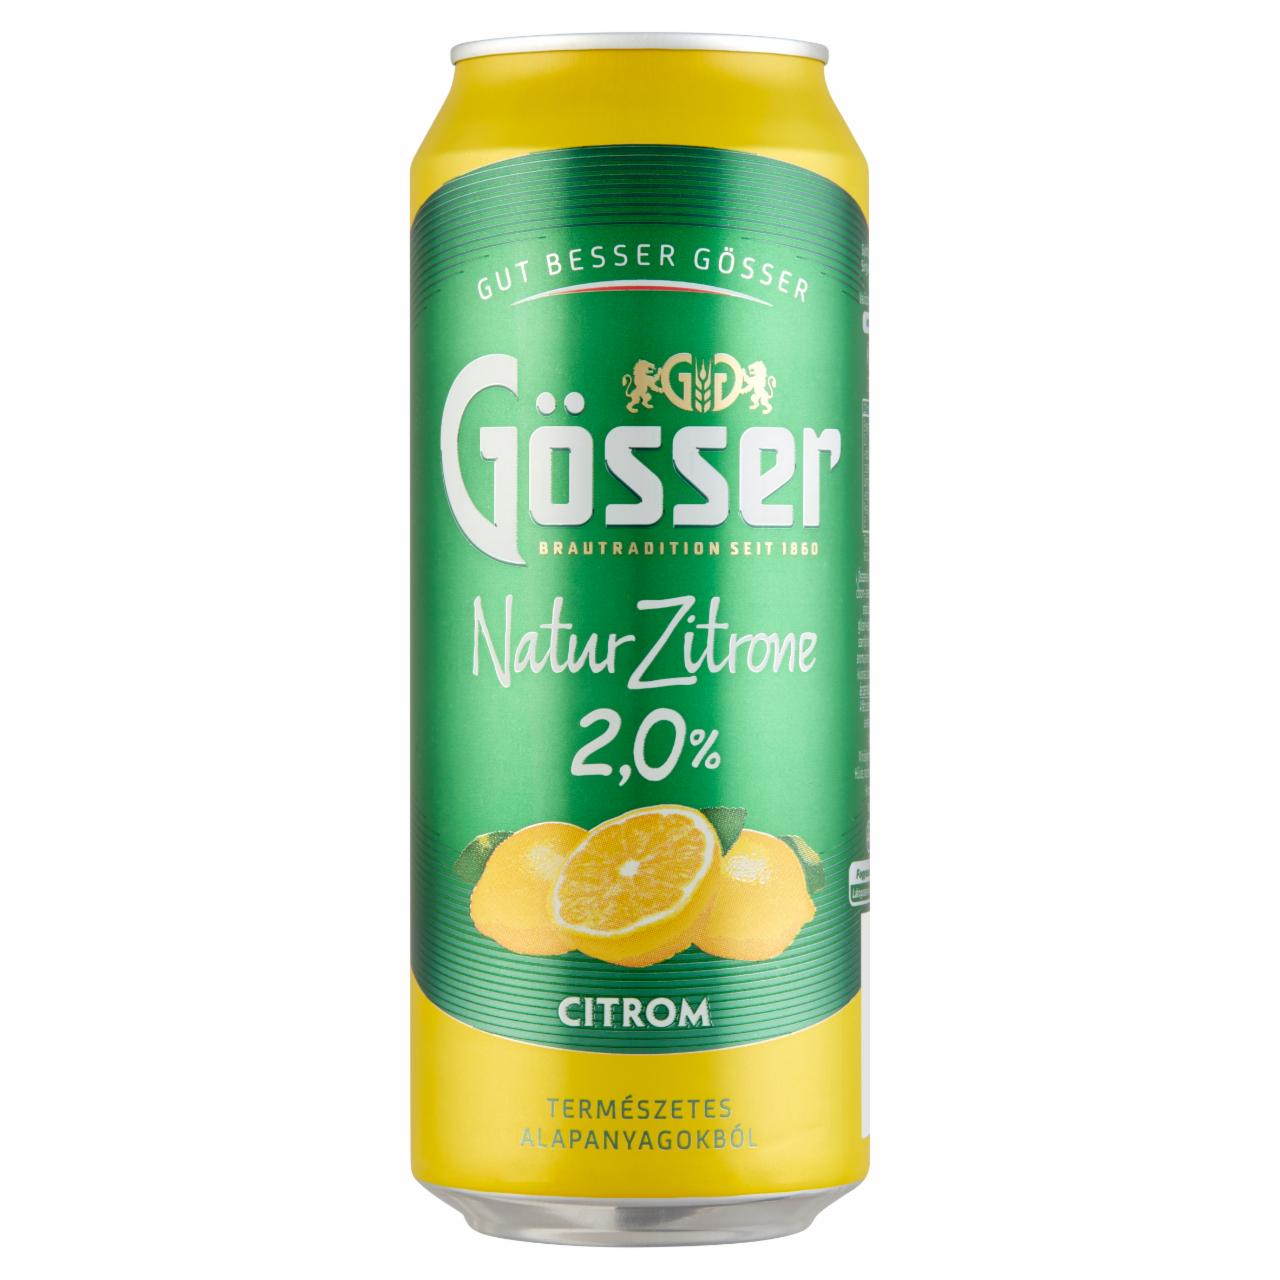 Képek - Gösser Natur Zitrone citromos sörital 2% 0,5 l doboz